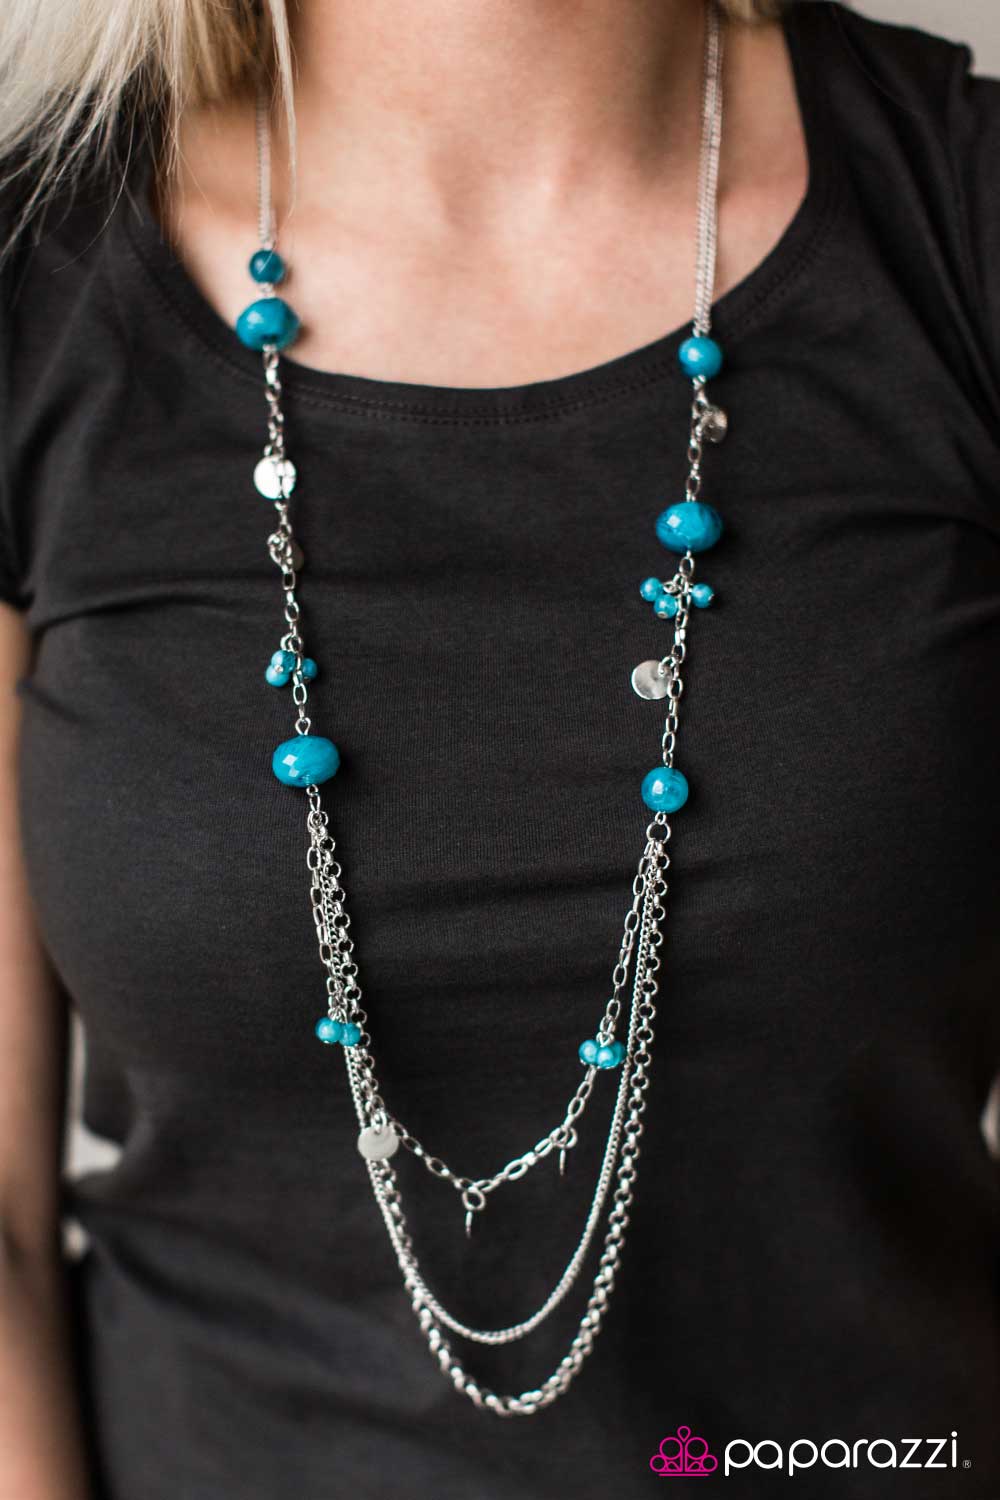 BOSSanova - Blue - Paparazzi necklace